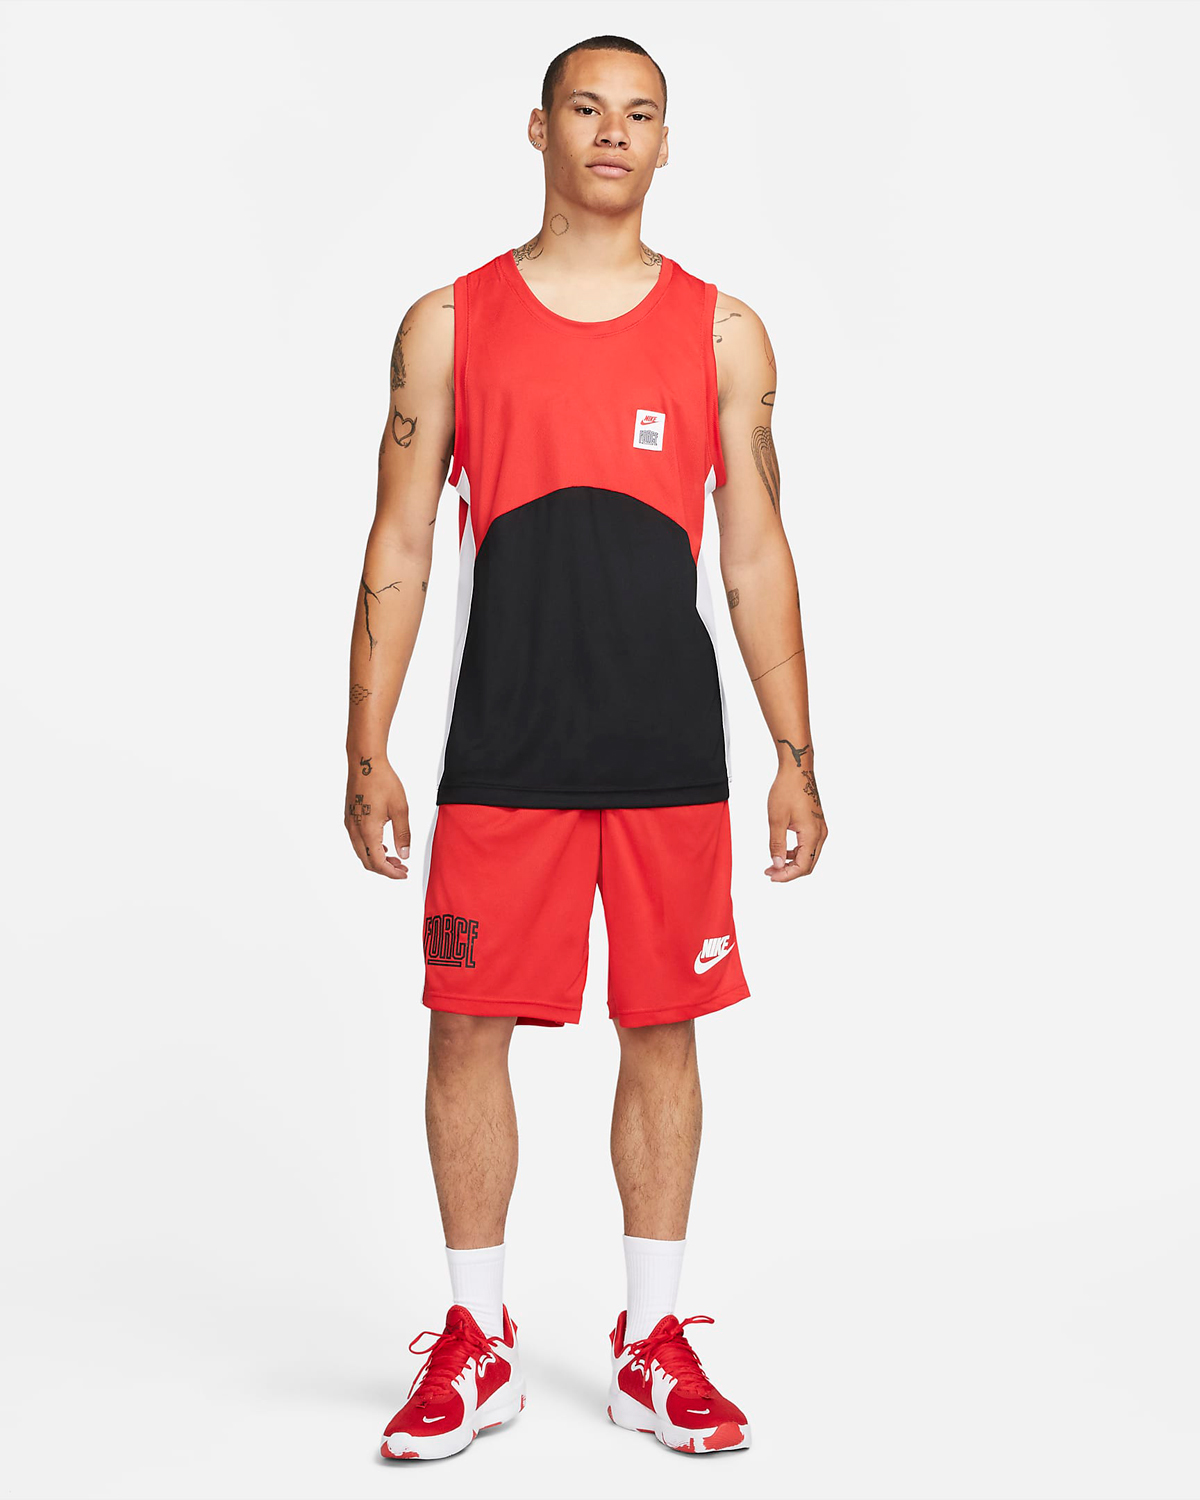 Nike-Starting-5-Basketball-Shorts-University-Red-Black-White-Outfit